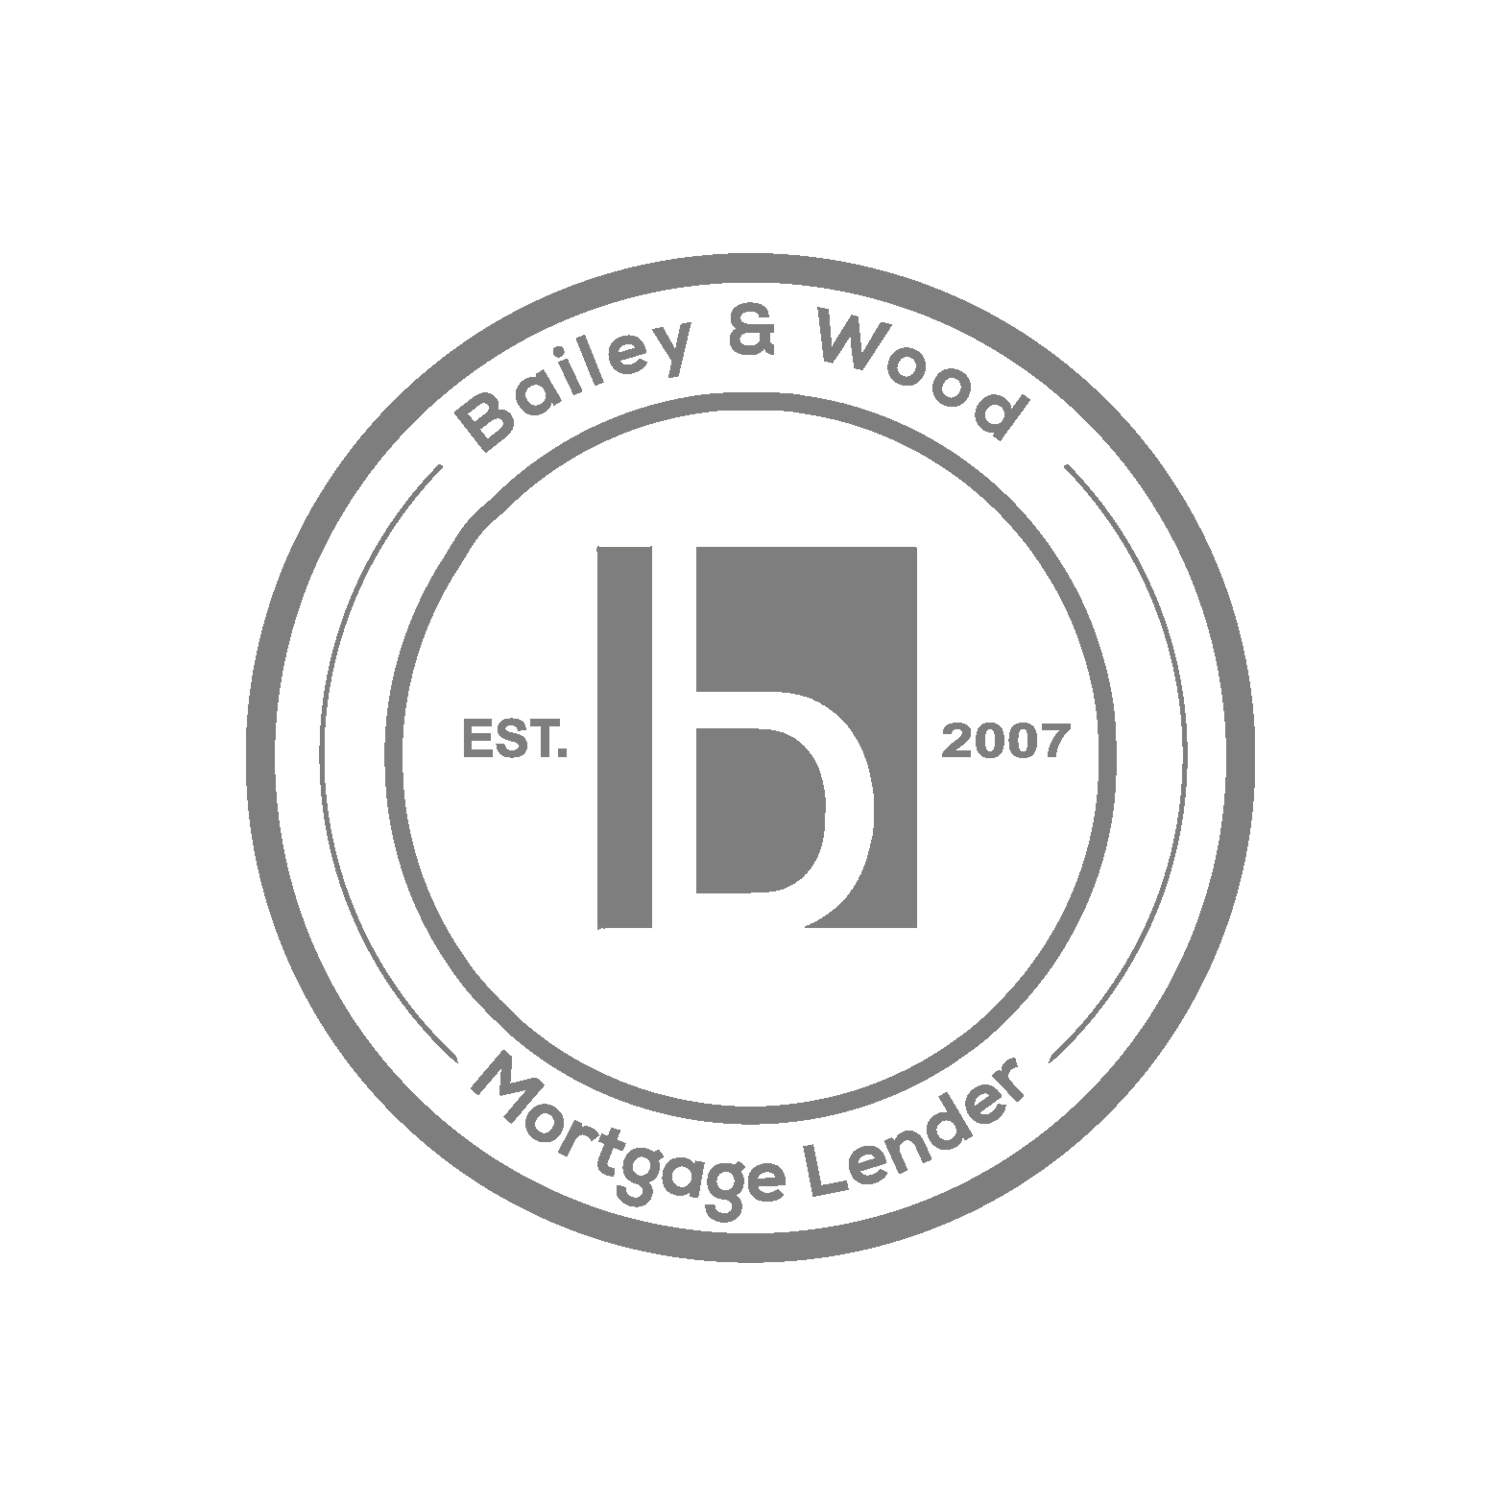 Bailey & Wood Mortgage Lender Logo